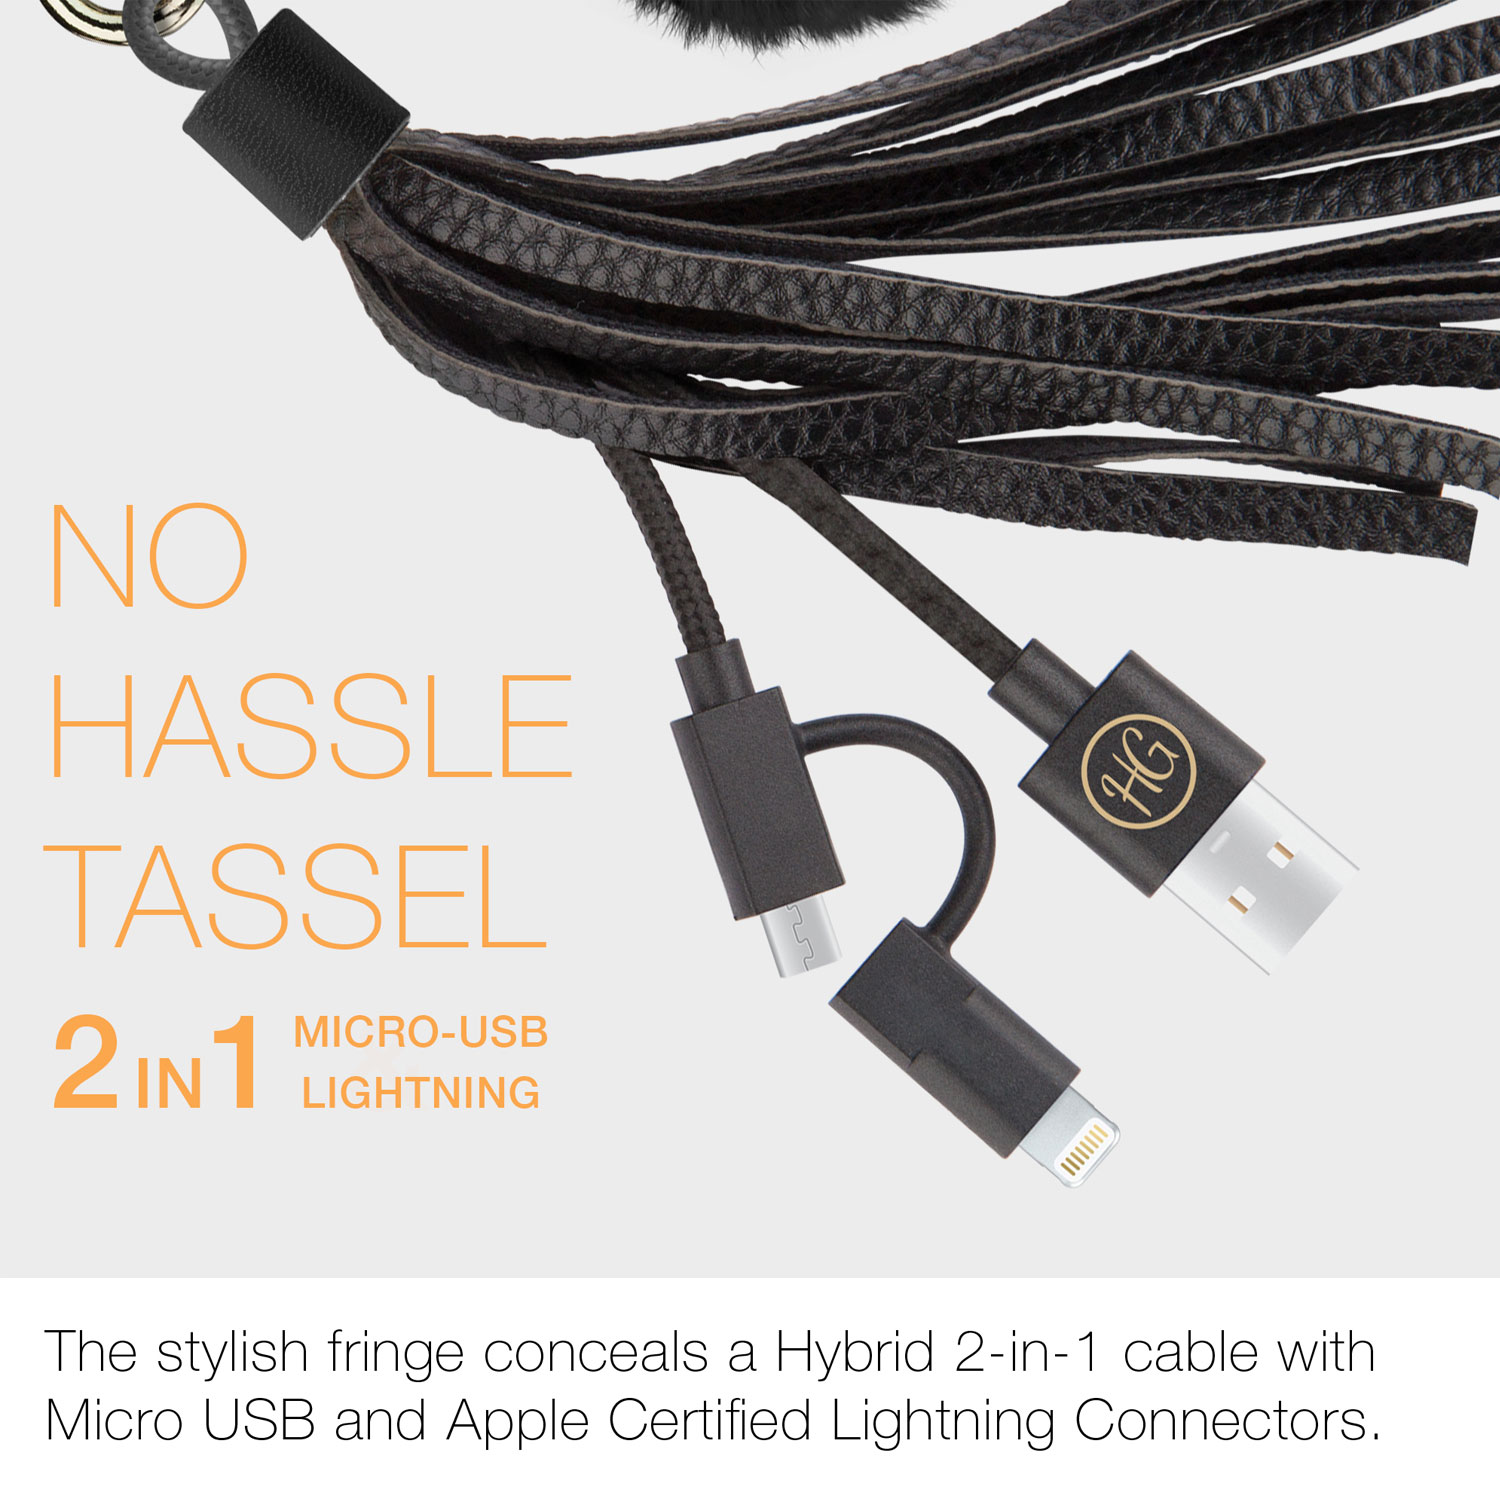 Hello Gorgeous MFI Hybrid Cable Tassel Key Chain Fur